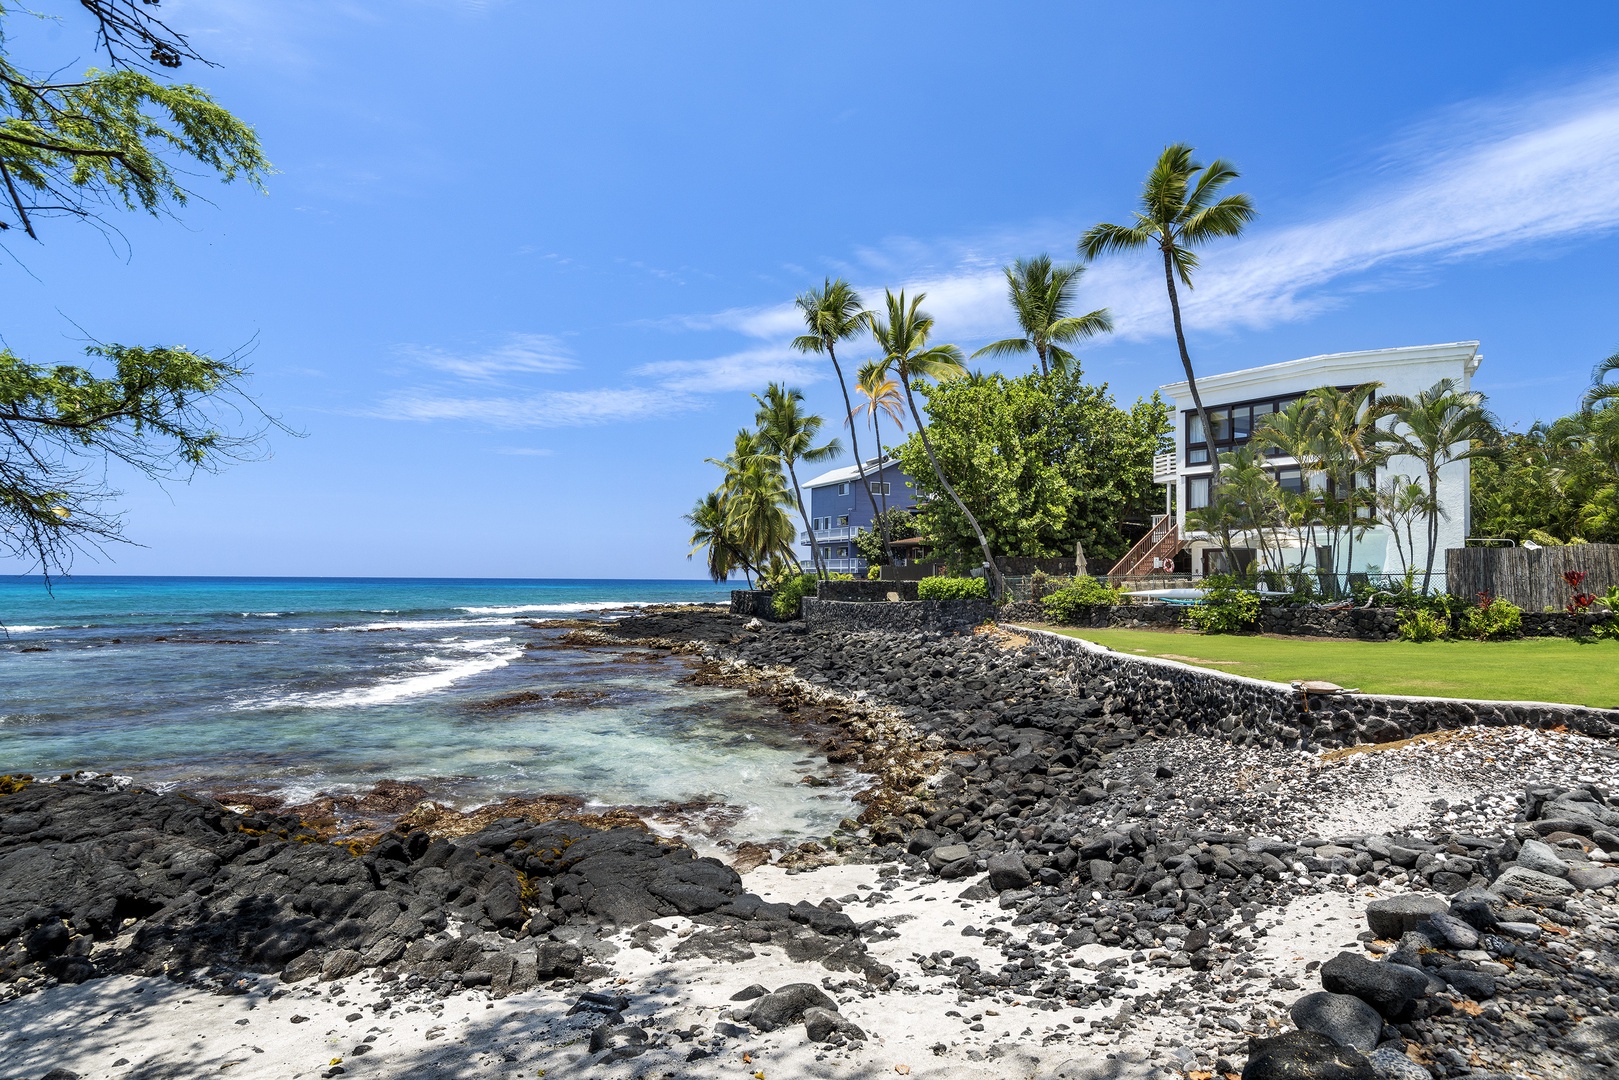 Kailua Kona Vacation Rentals, Kona's Shangri La - Sand strip leading into the beach in front of the property